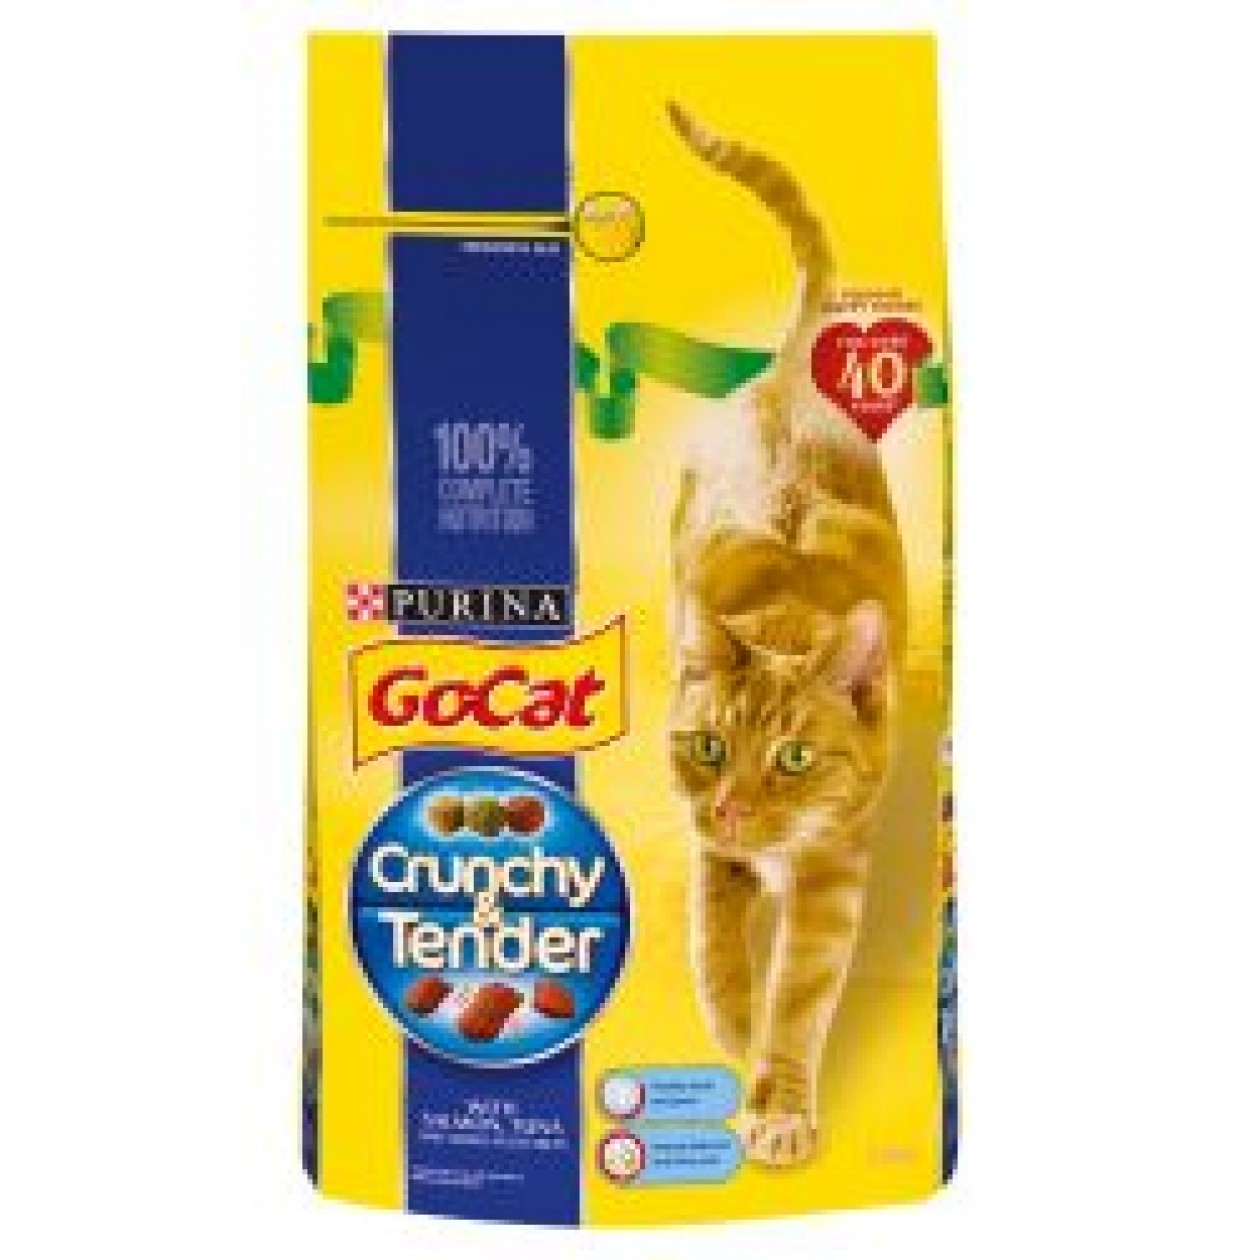 Go-Cat Crunchy & Tender Salmon,Tuna & Veg, 1.5kg